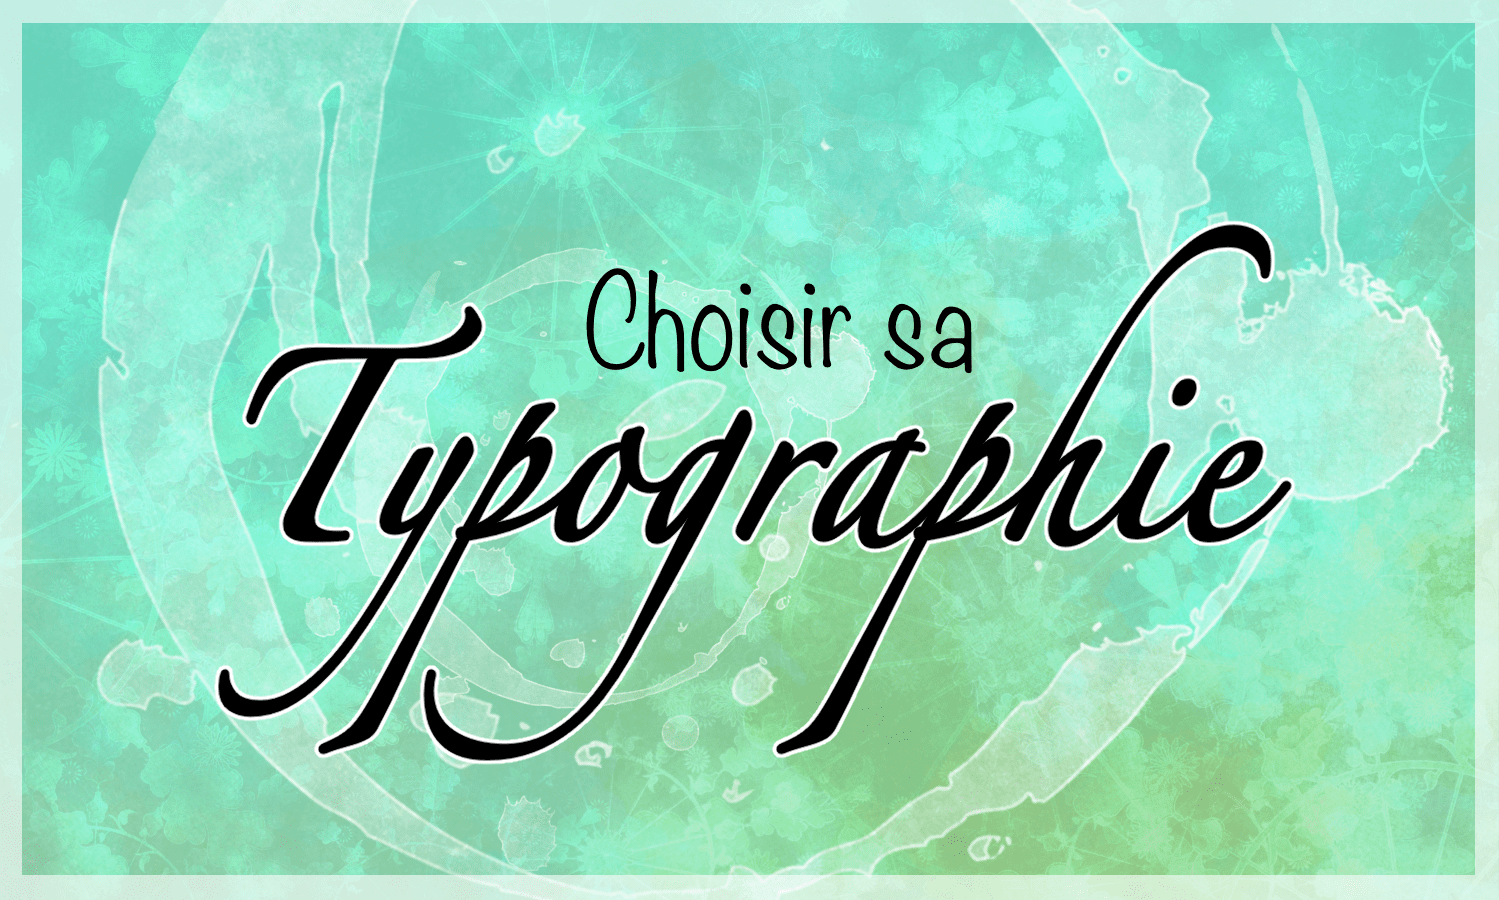 Choisir sa typographie : titre